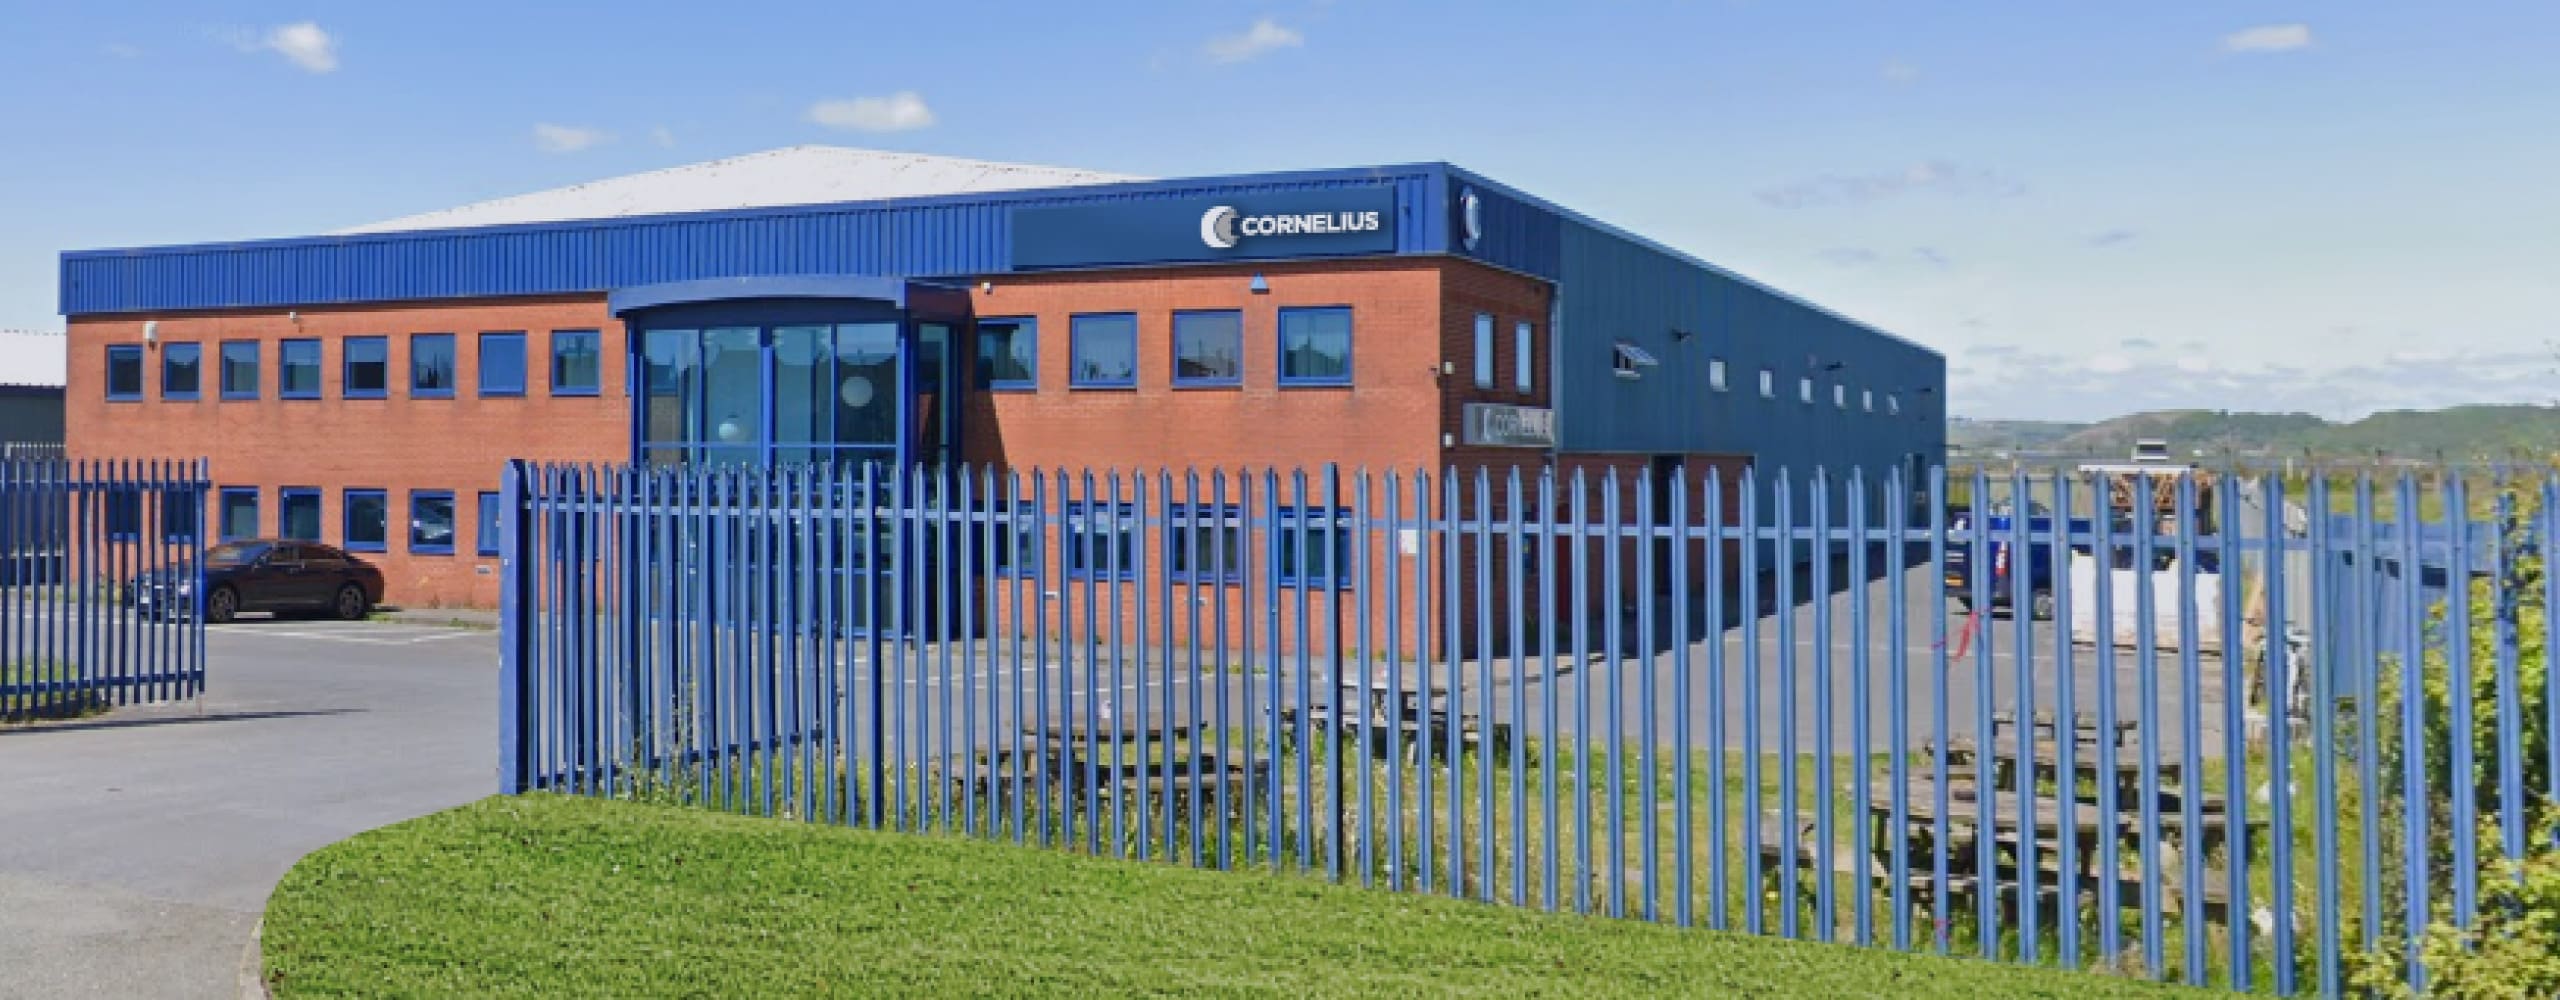 Electronic Manufacturers UK - Cornelius Electronics, UK - cornelius-electronics.co.uk